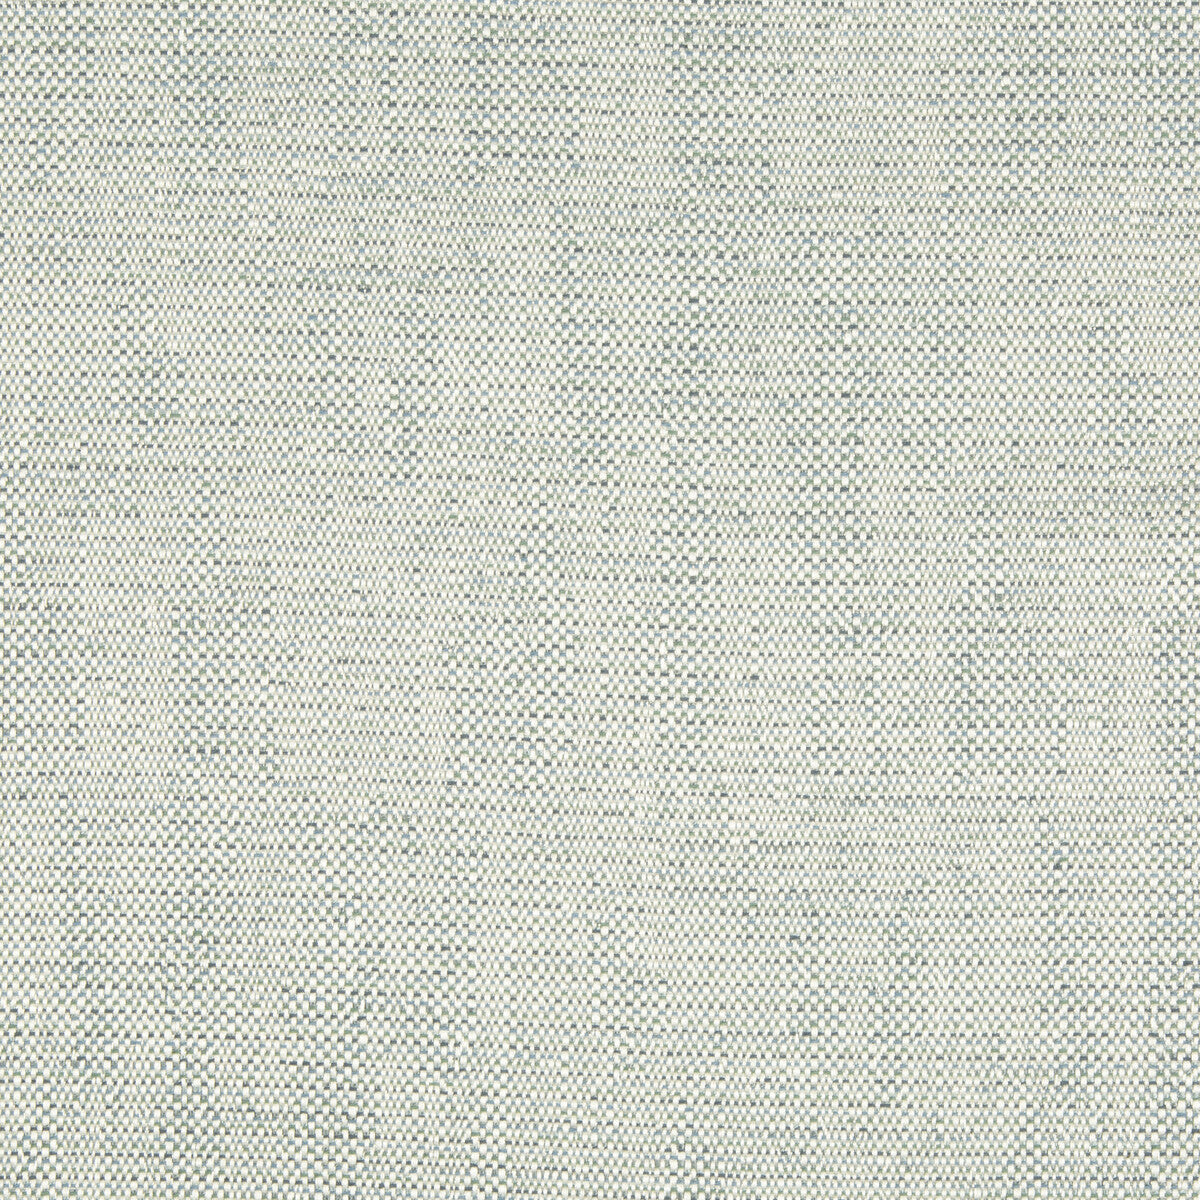 Kravet Design fabric in 34774-5 color - pattern 34774.5.0 - by Kravet Design in the Gis collection